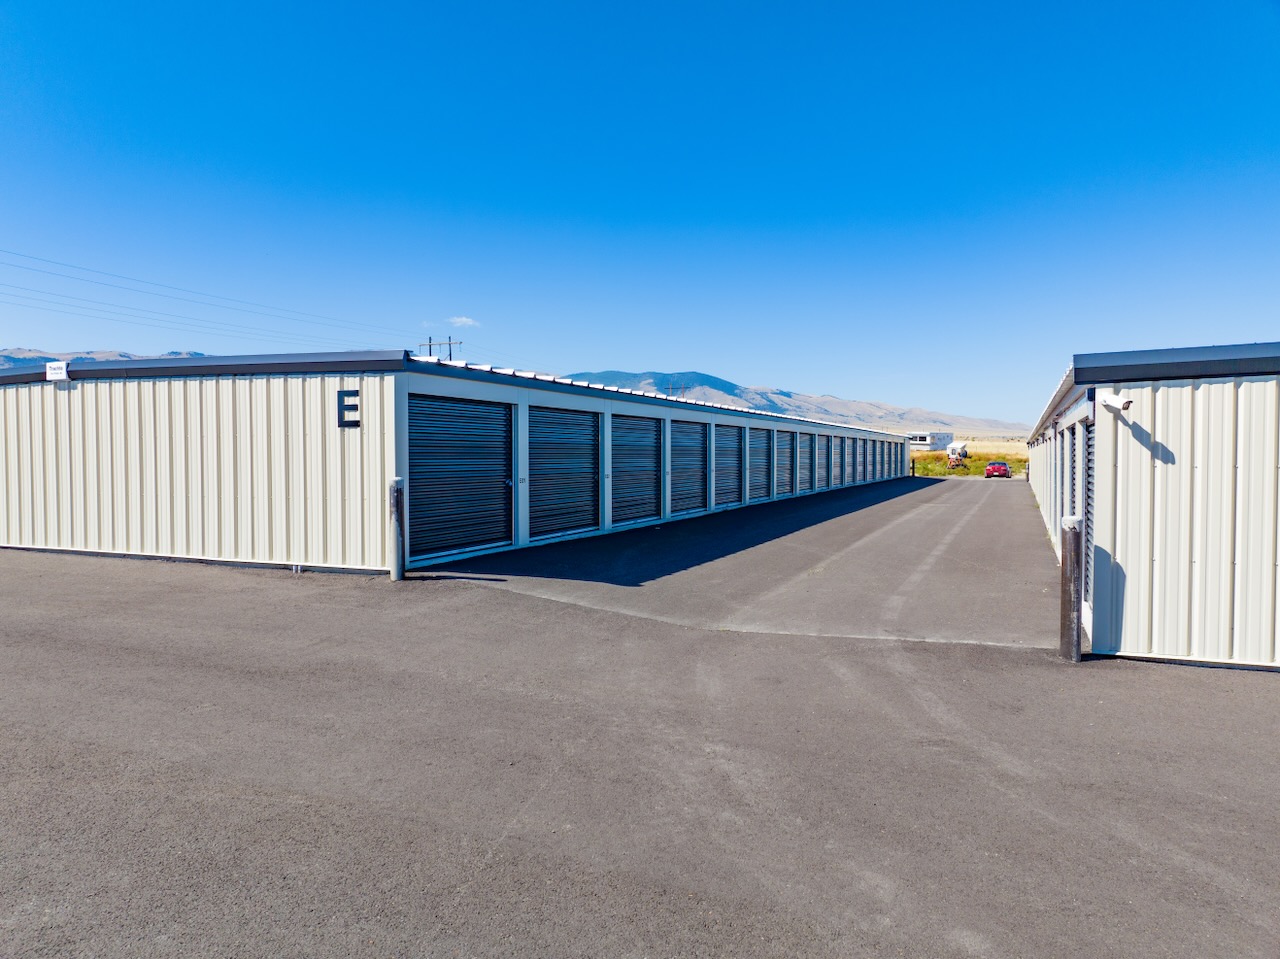 10x10 Self Storage Units in Townsend, MT 59644